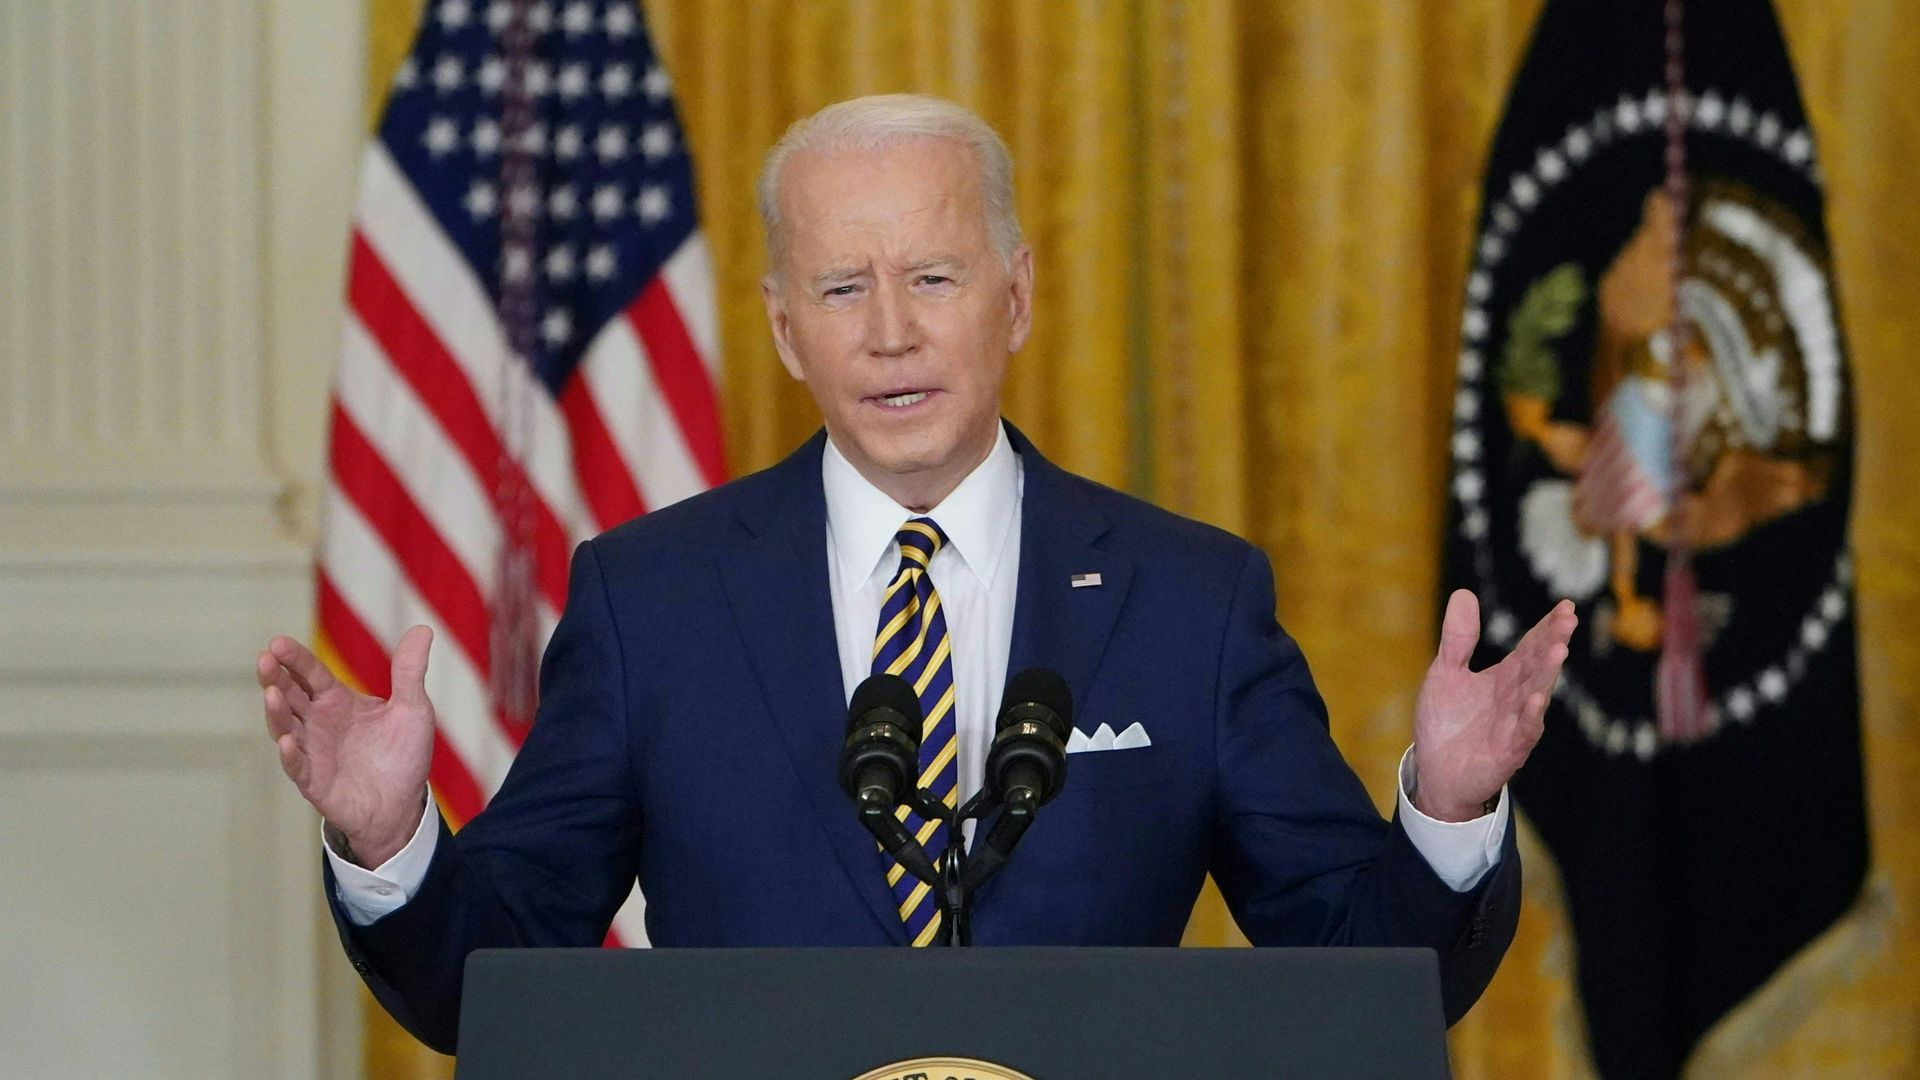 Photo of Joe Biden speaking from the podium